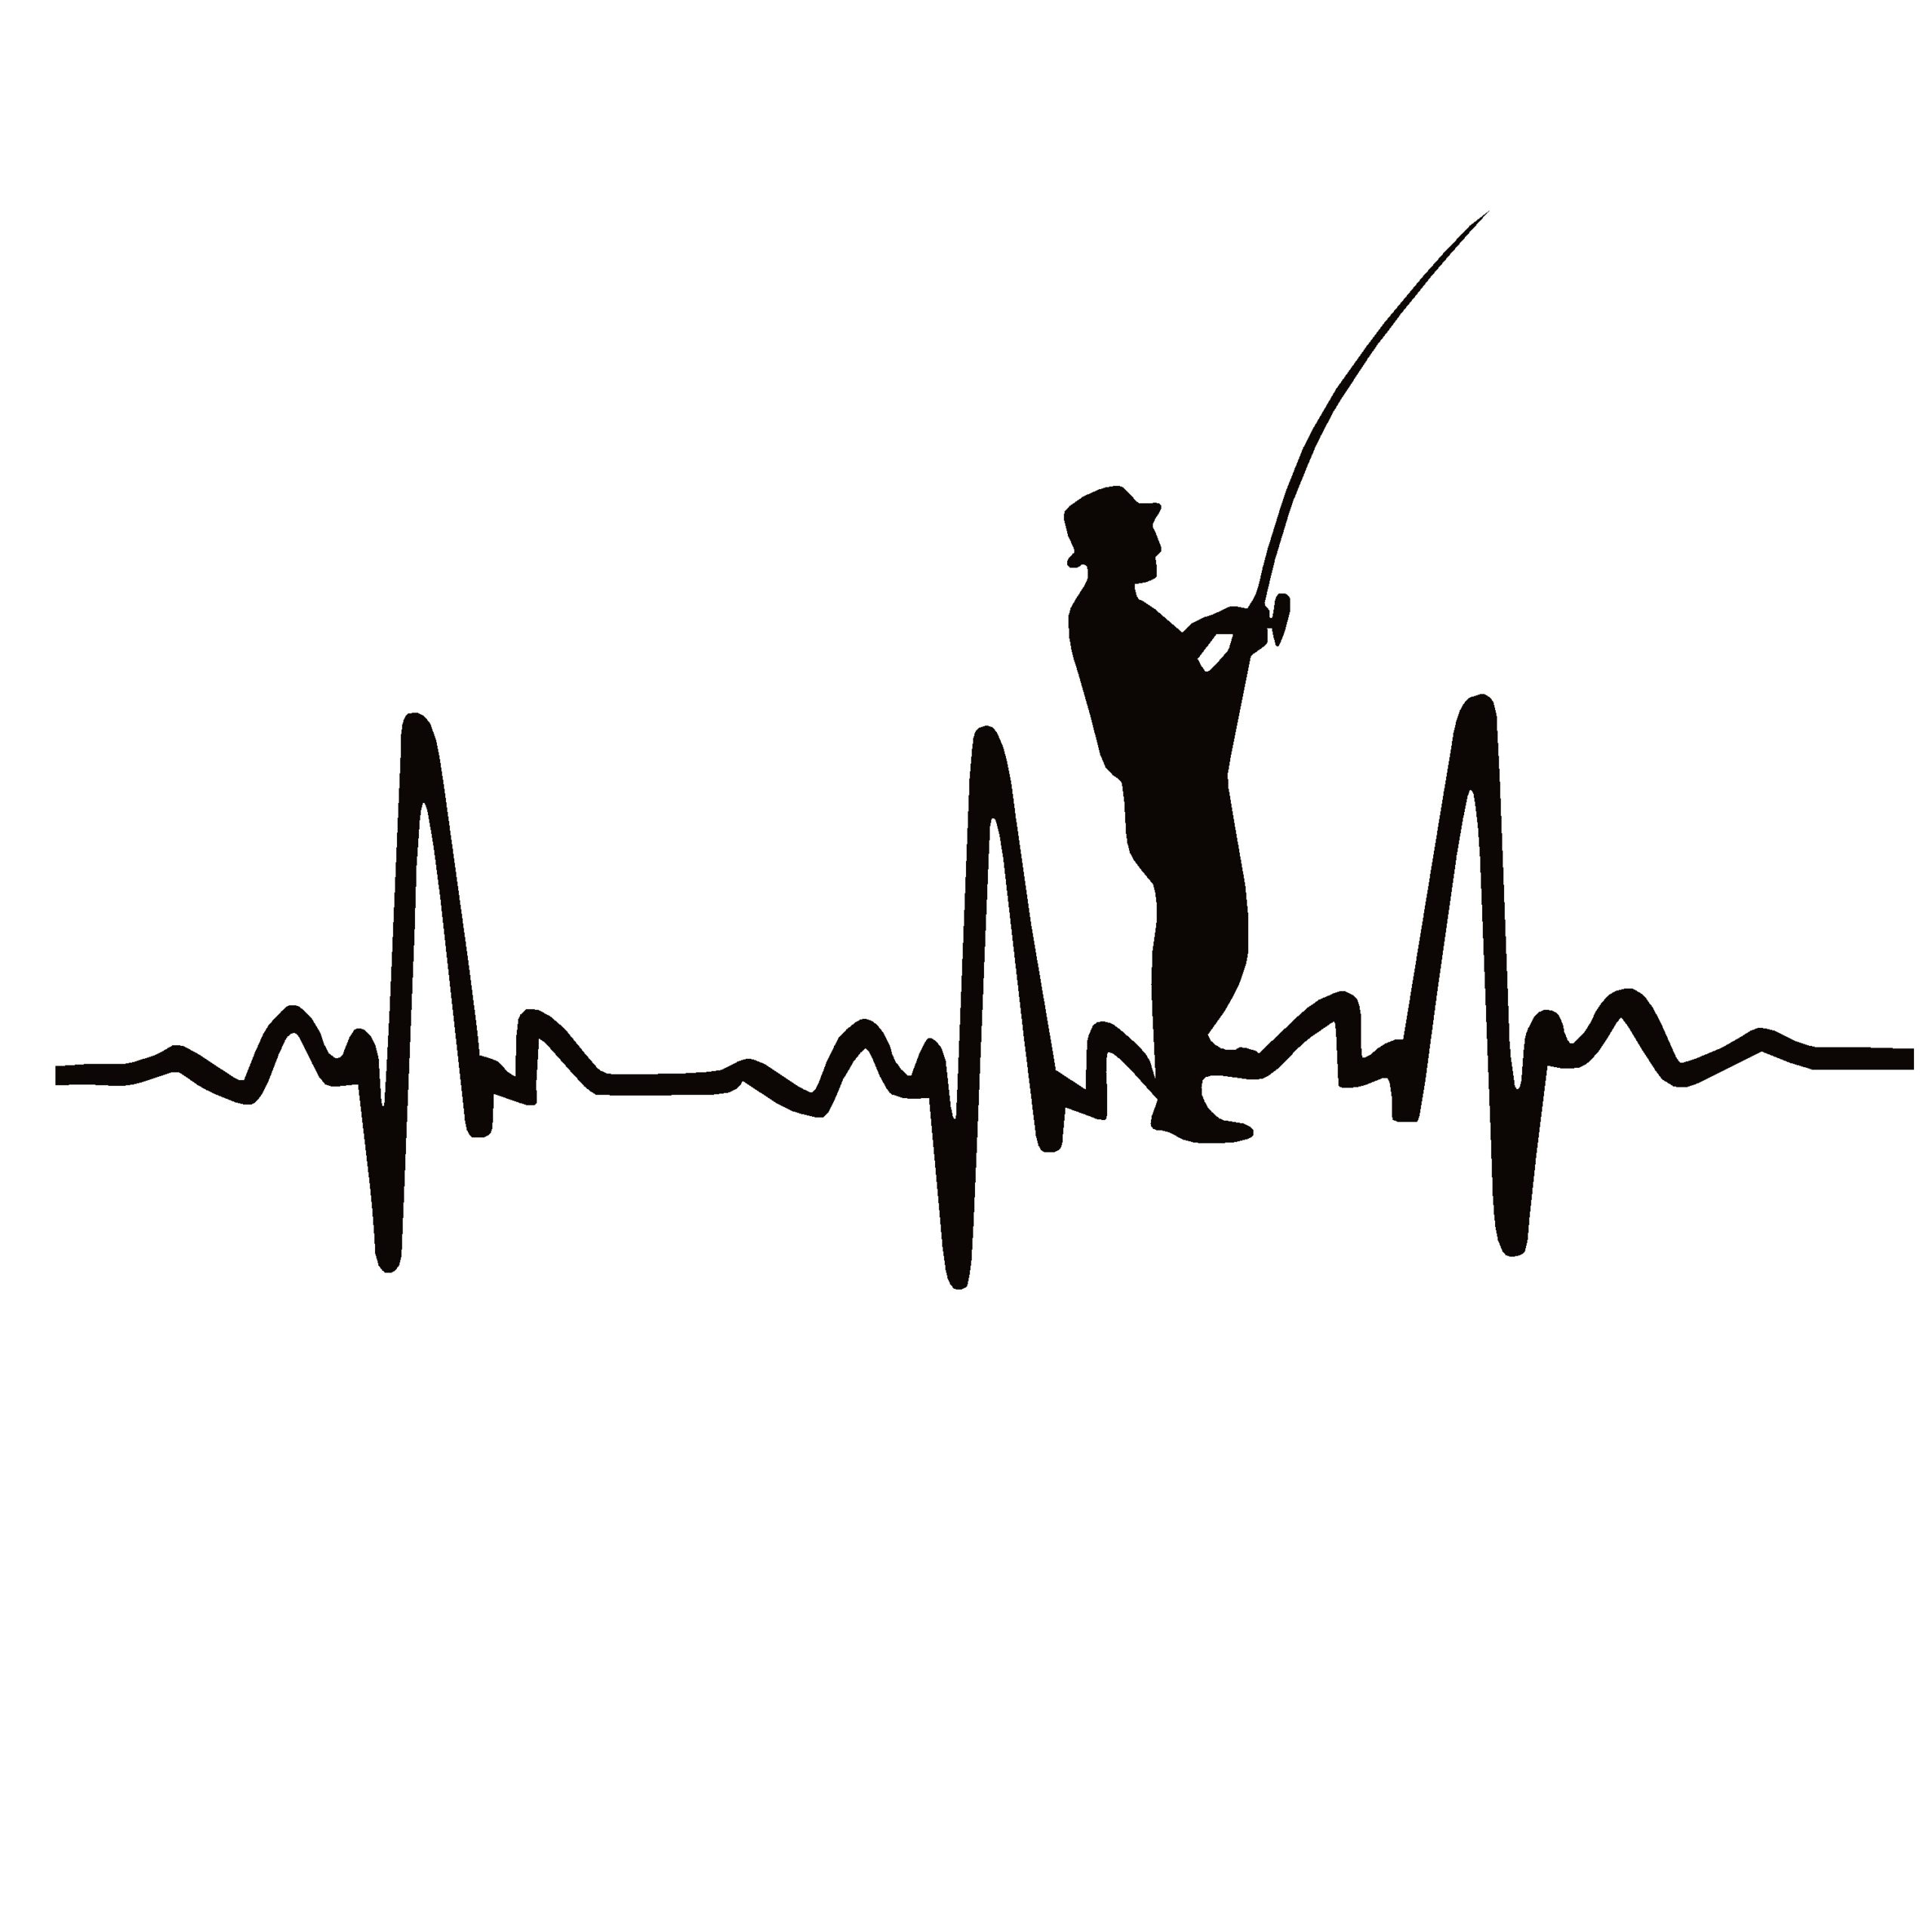 Fisherman Heartbeat Fishing Decal - Fisherman Heartbeat Window Sticker